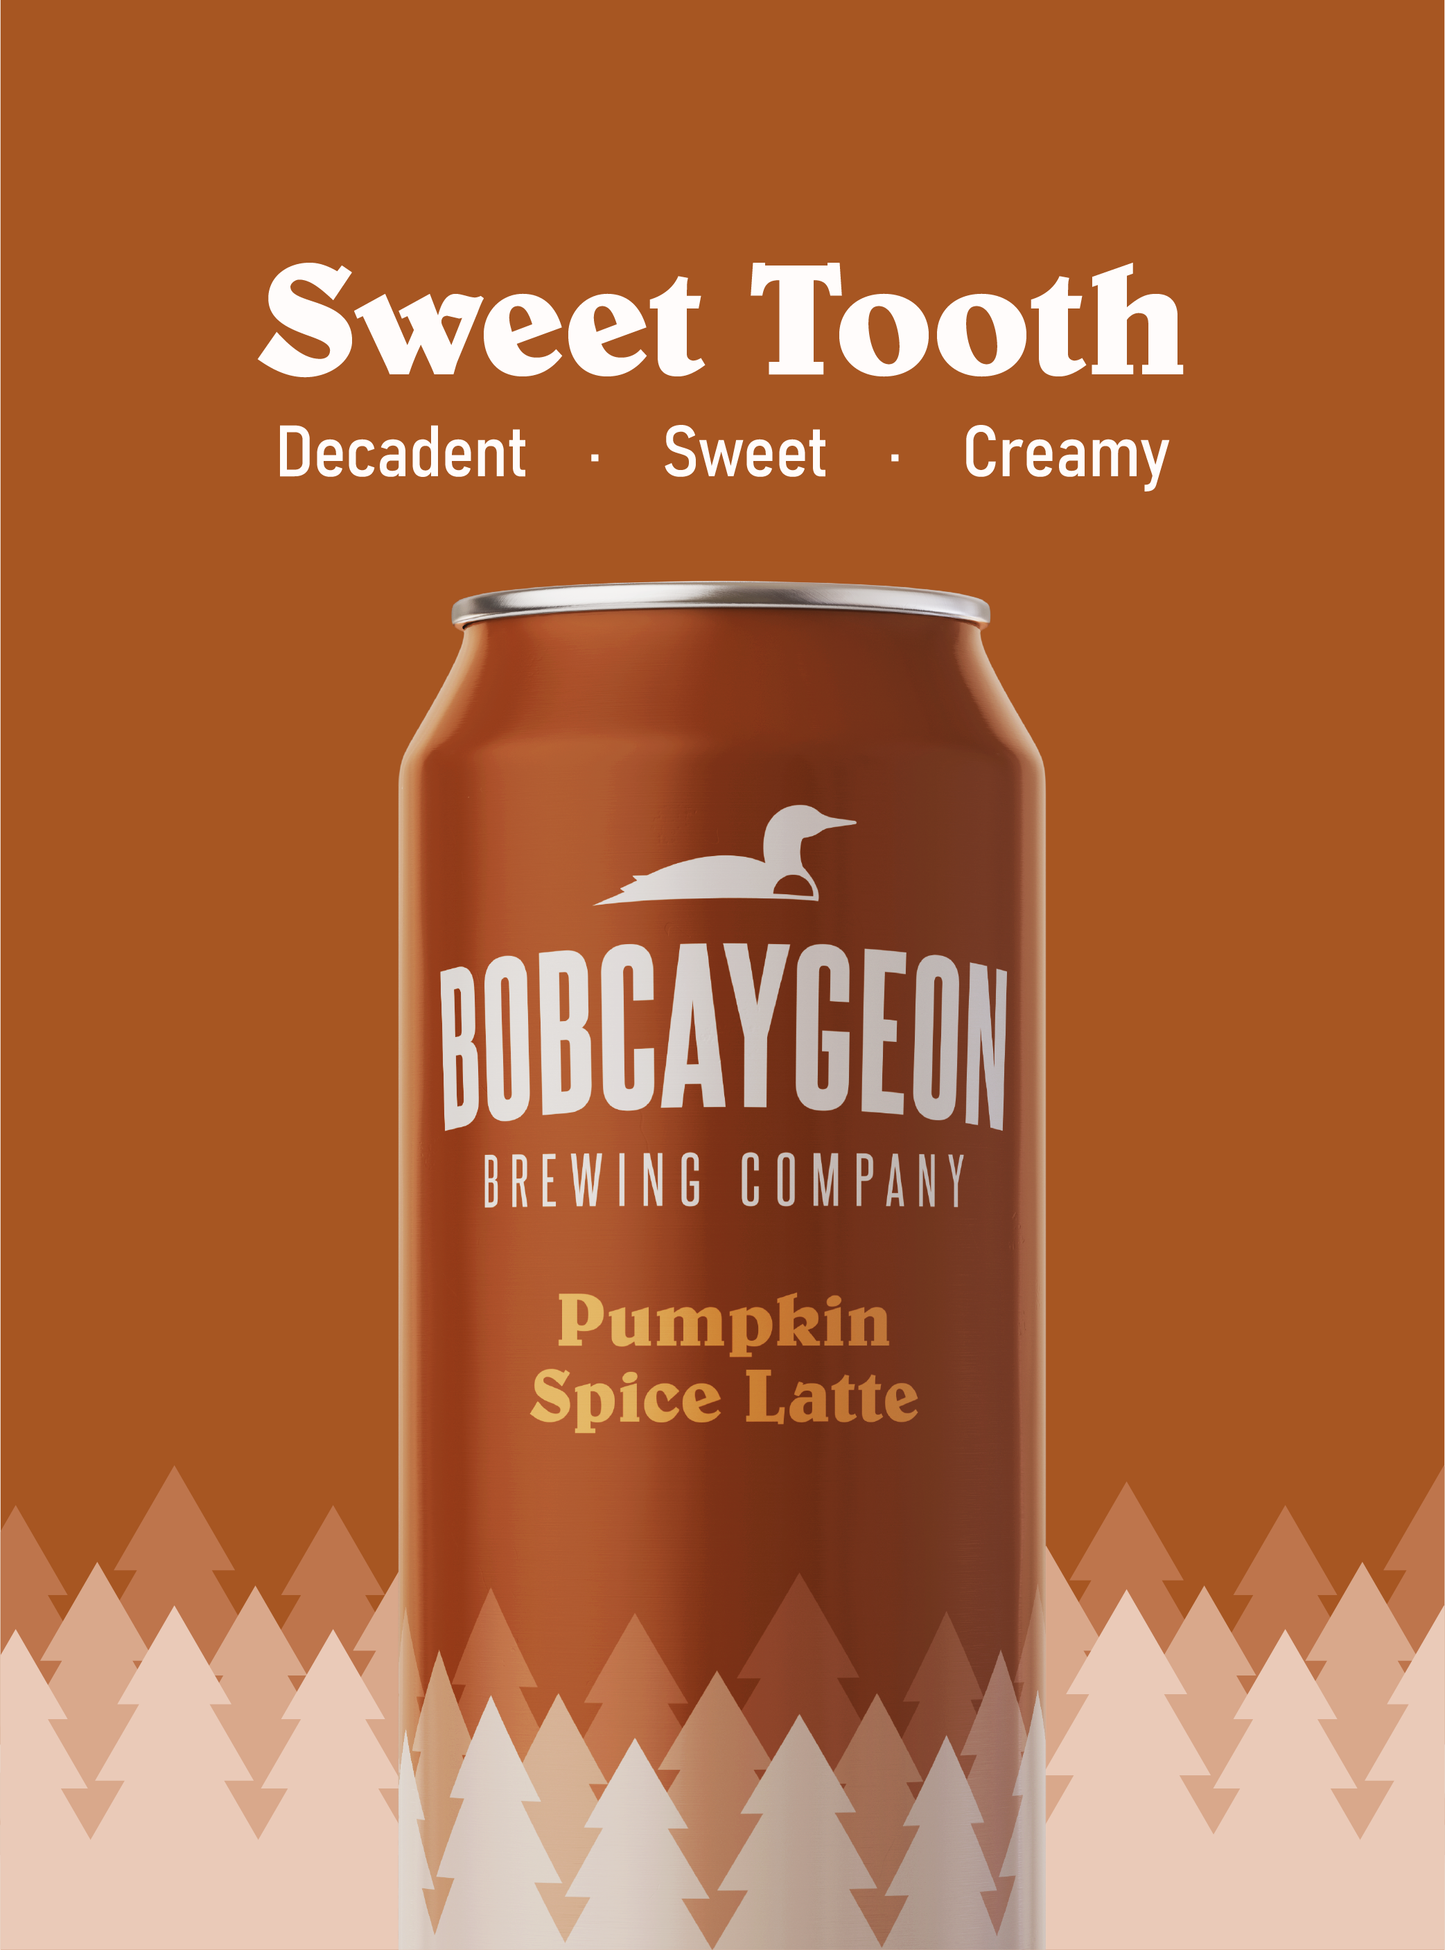 Sweet Tooth: Pumpkin Spice Latte